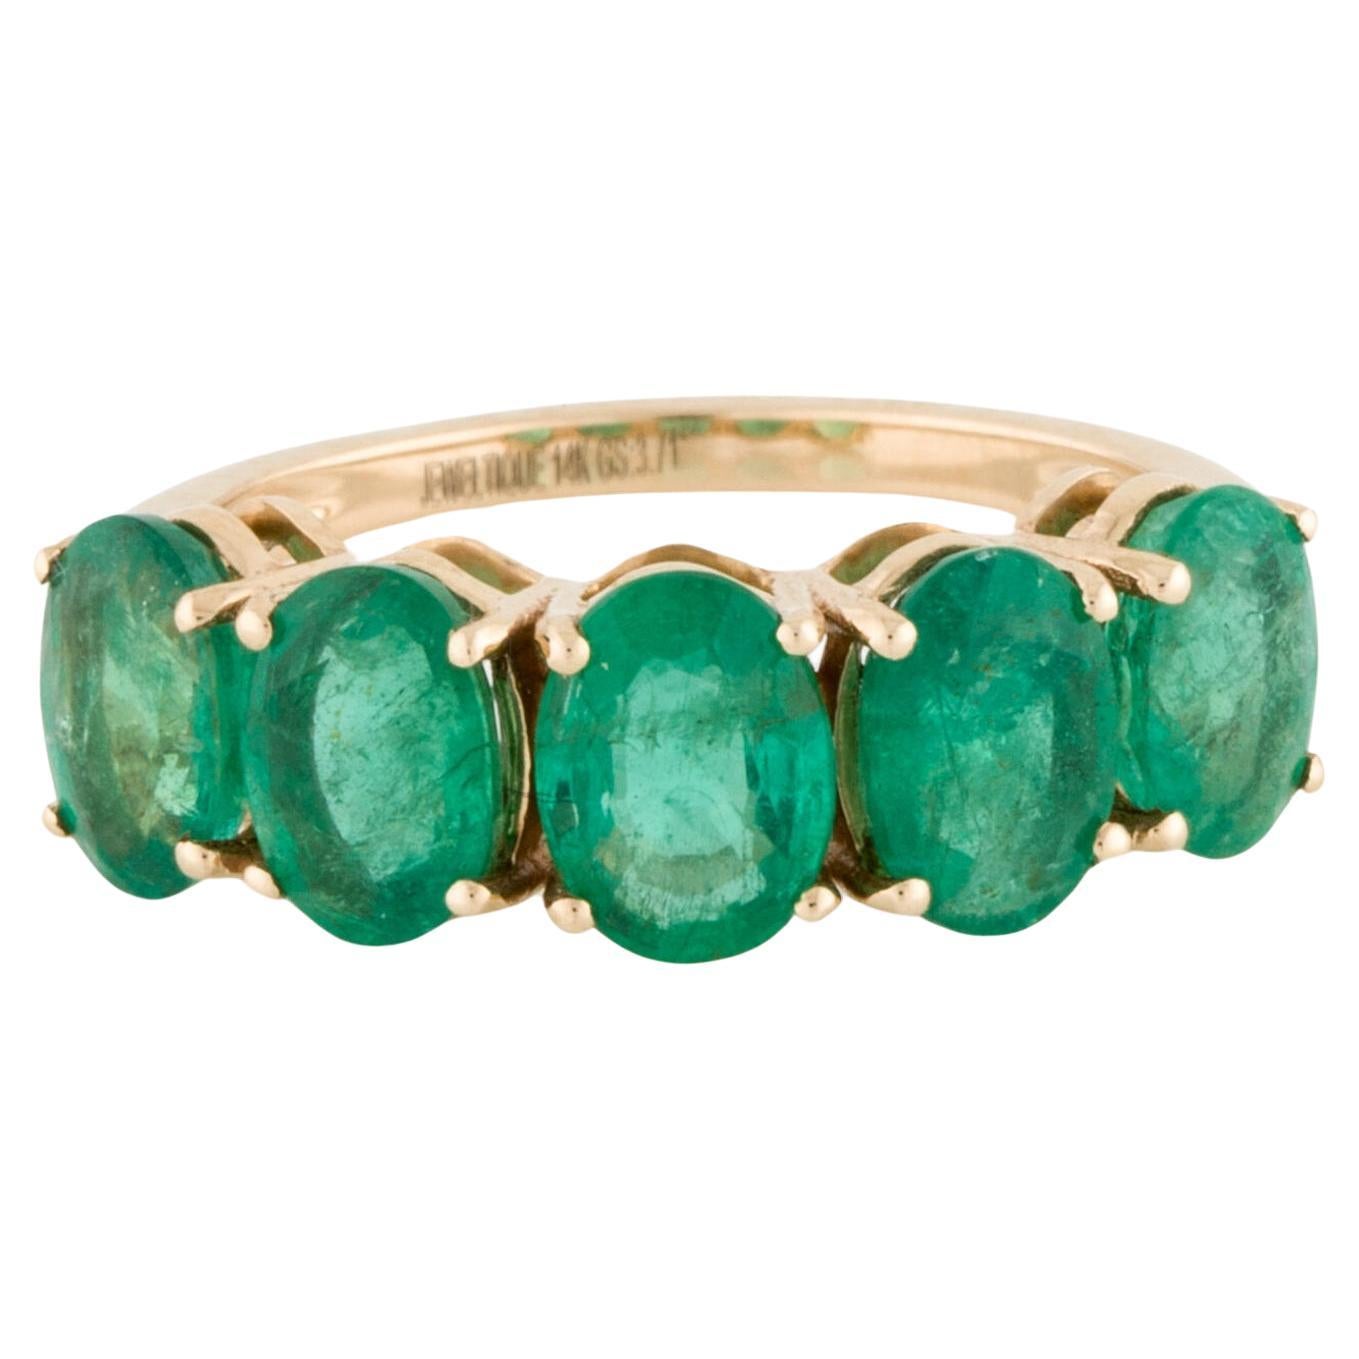 14K Emerald Band - Size 6.75 - Timeless Elegance, Luxury Jewelry Statement Ring